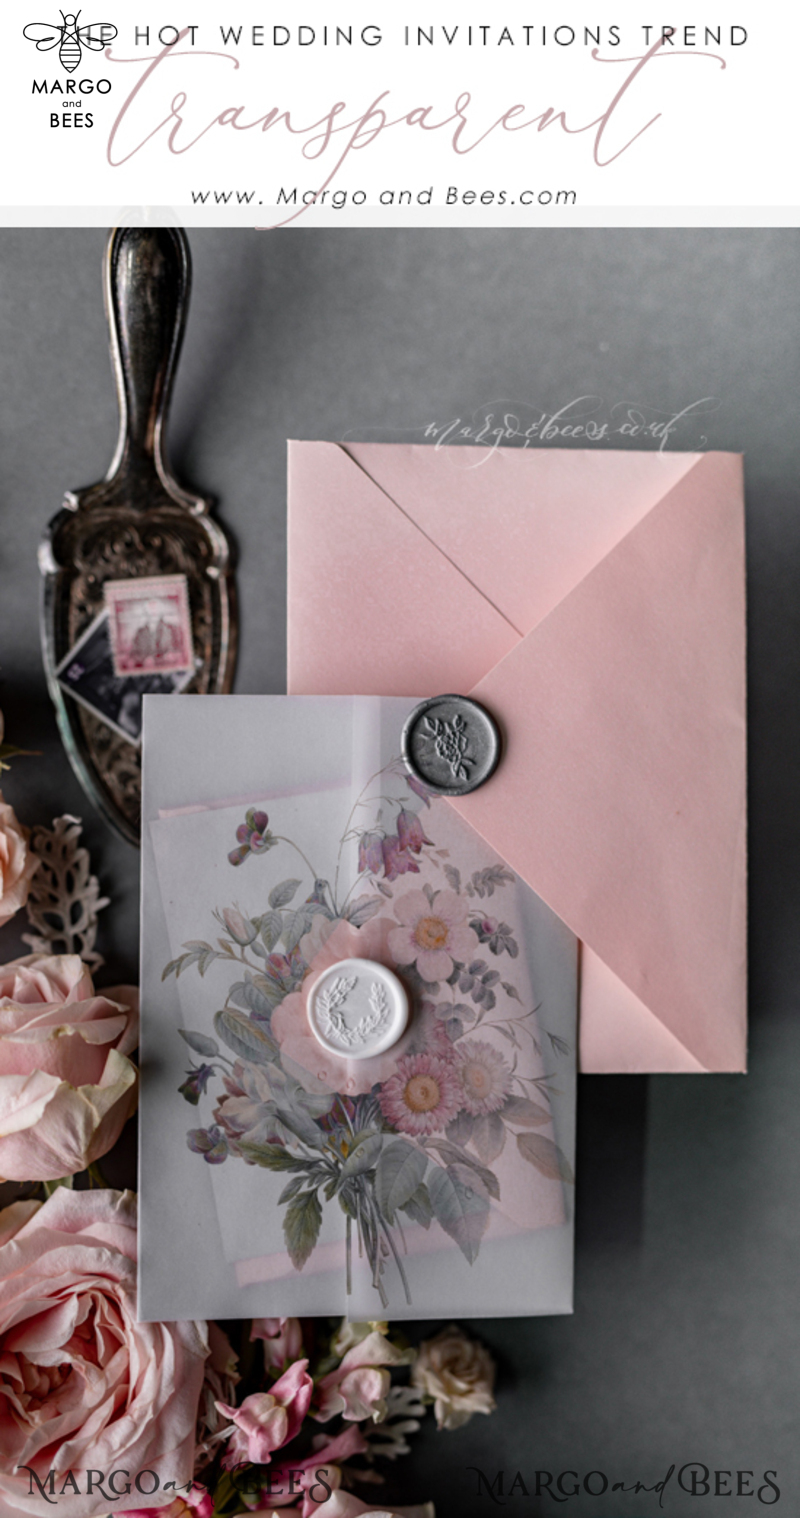 Luxury Acrylic Plexi Wedding Invitations, Romantic Blush Pink Wedding Invites, Elegant Light Grey Wedding Cards With Vellum Cover, Vintage Handmade Wedding Stationery-38